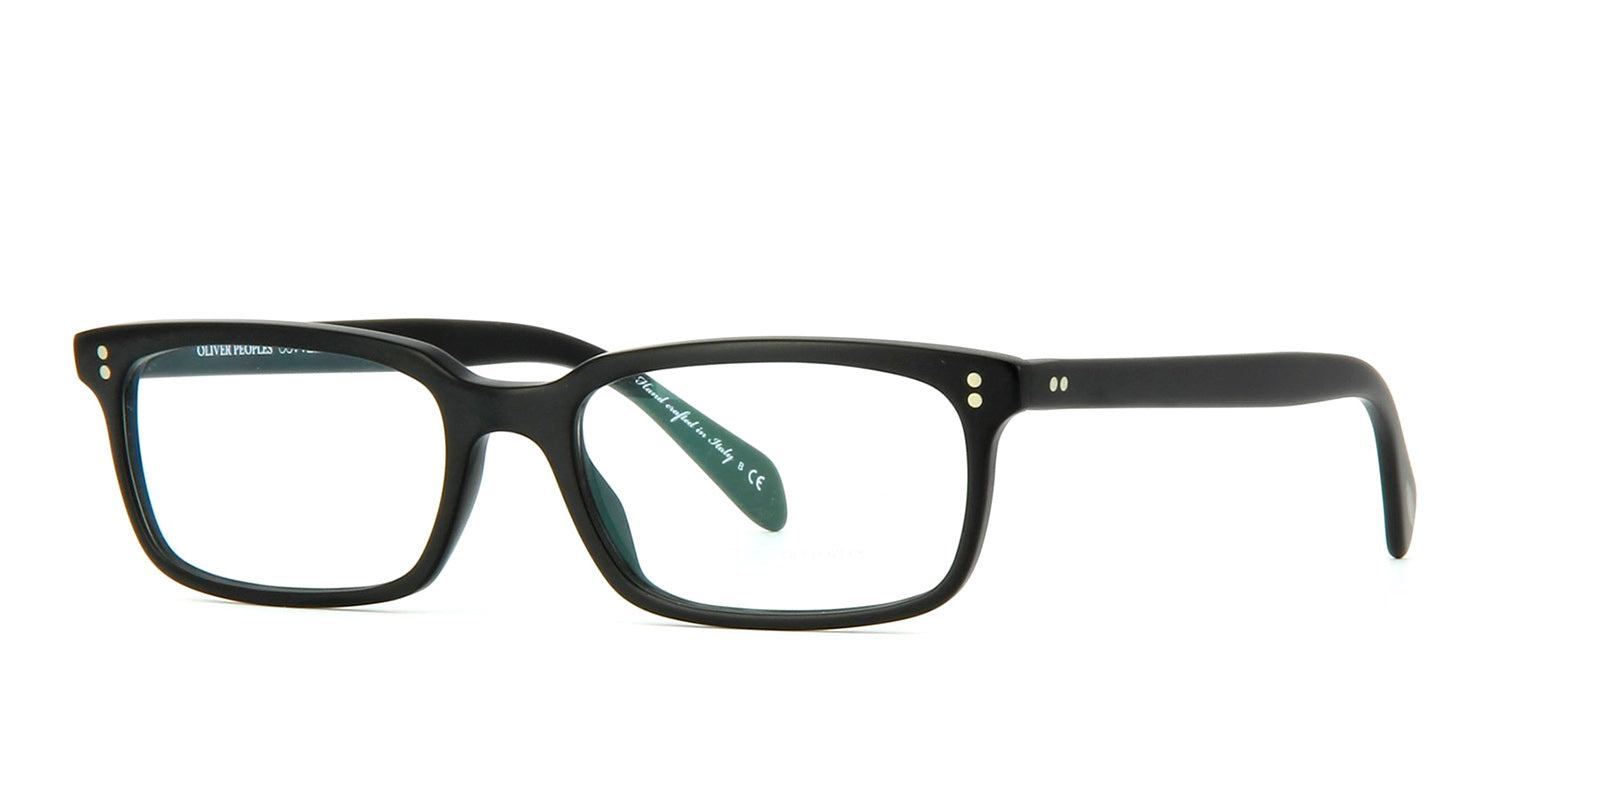 OLIVER PEOPLES Glasses - Official Retailer - US